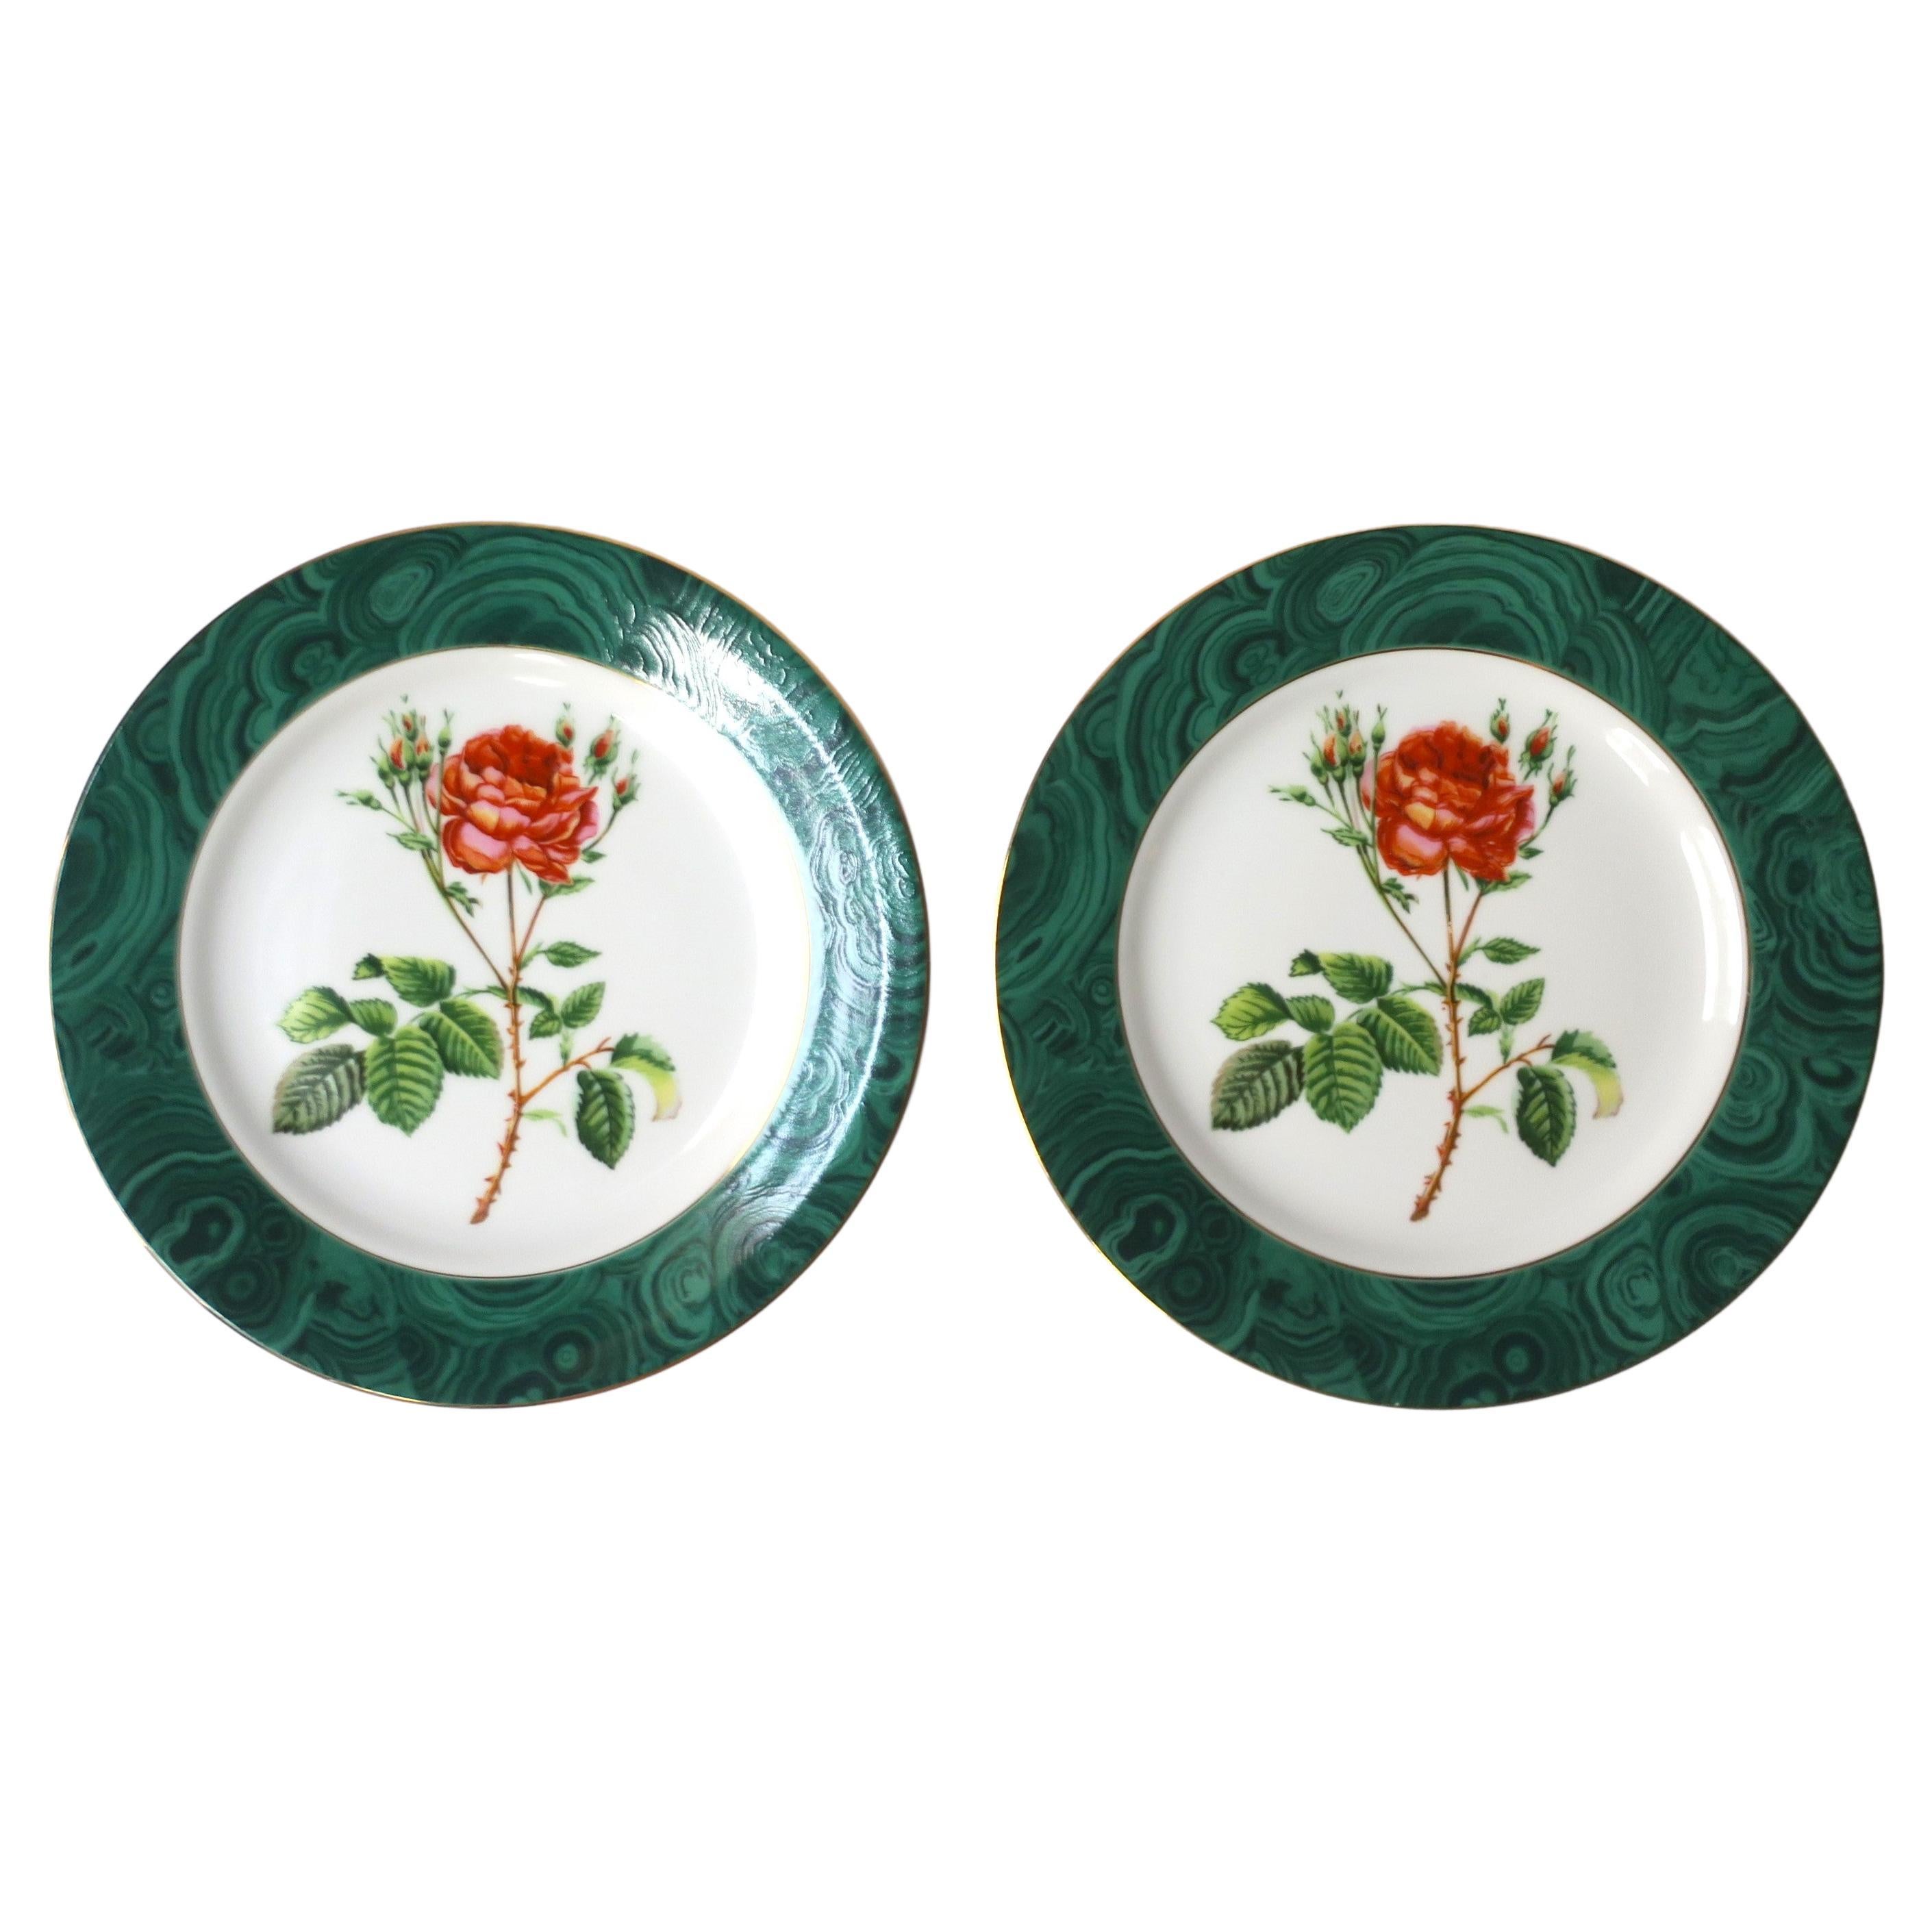 Green Malachite and Rose Chintz Porcelain Plates, Set of 2